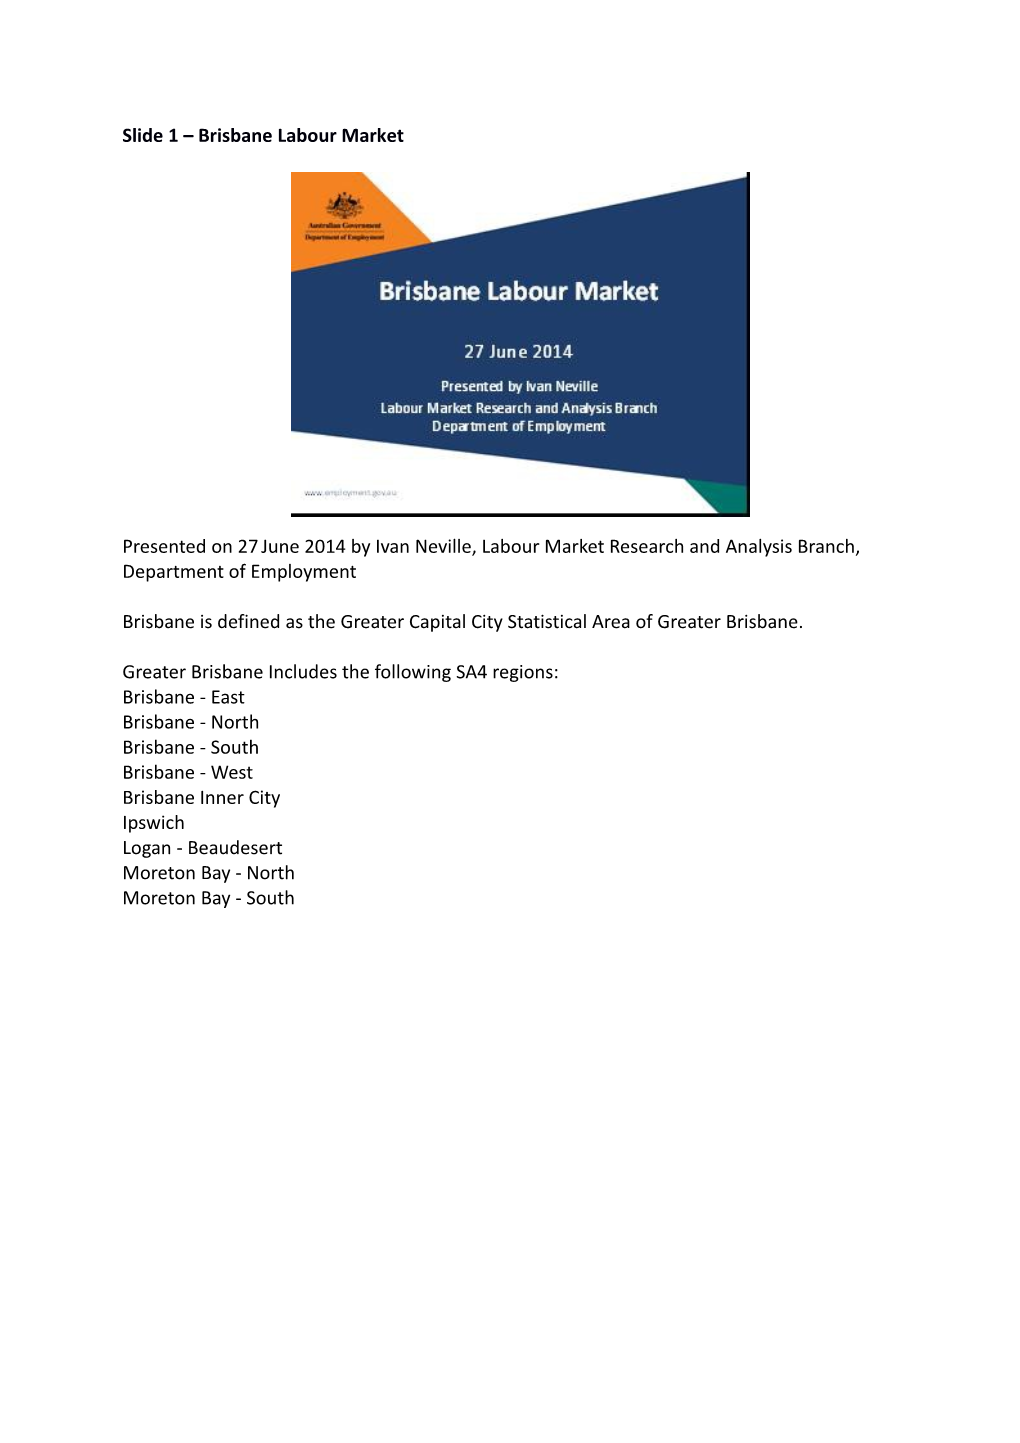 Slide 1 Brisbane Labour Market